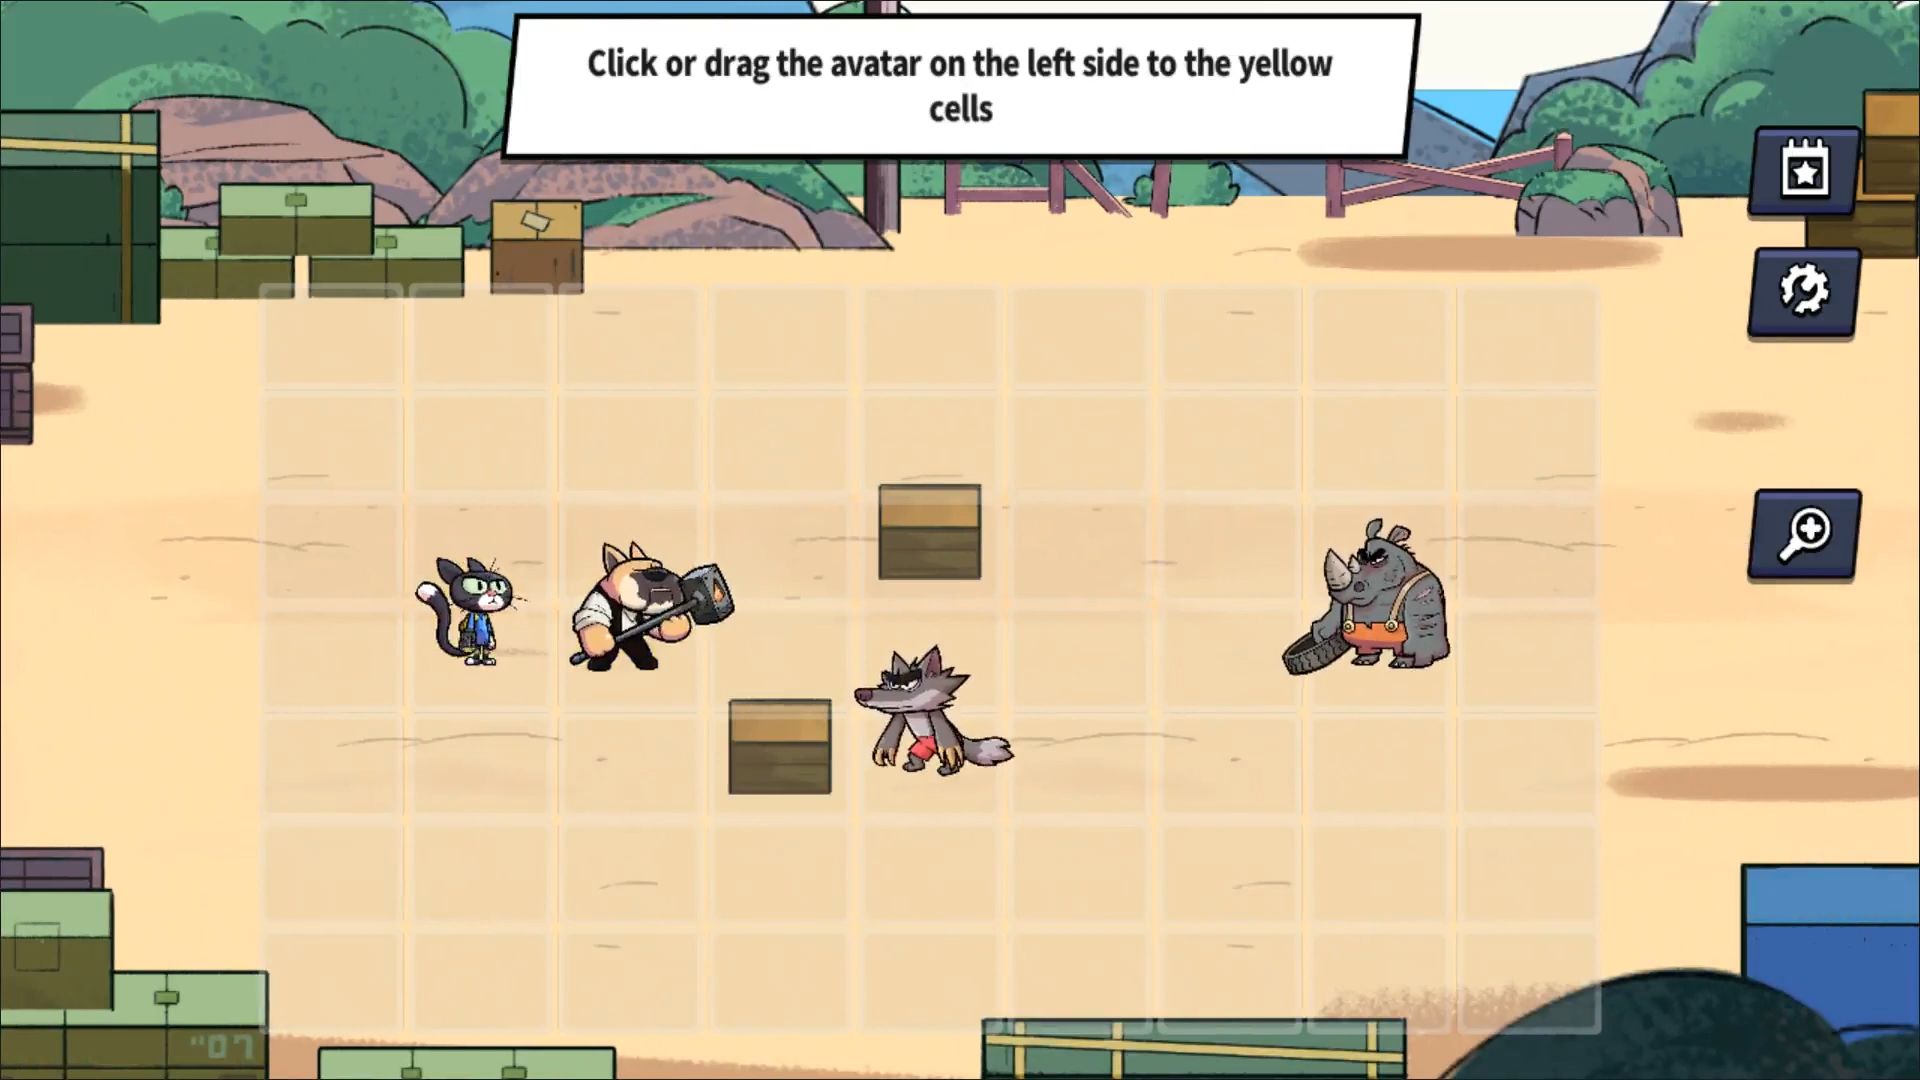 Kumu's Arena - Android game screenshots.